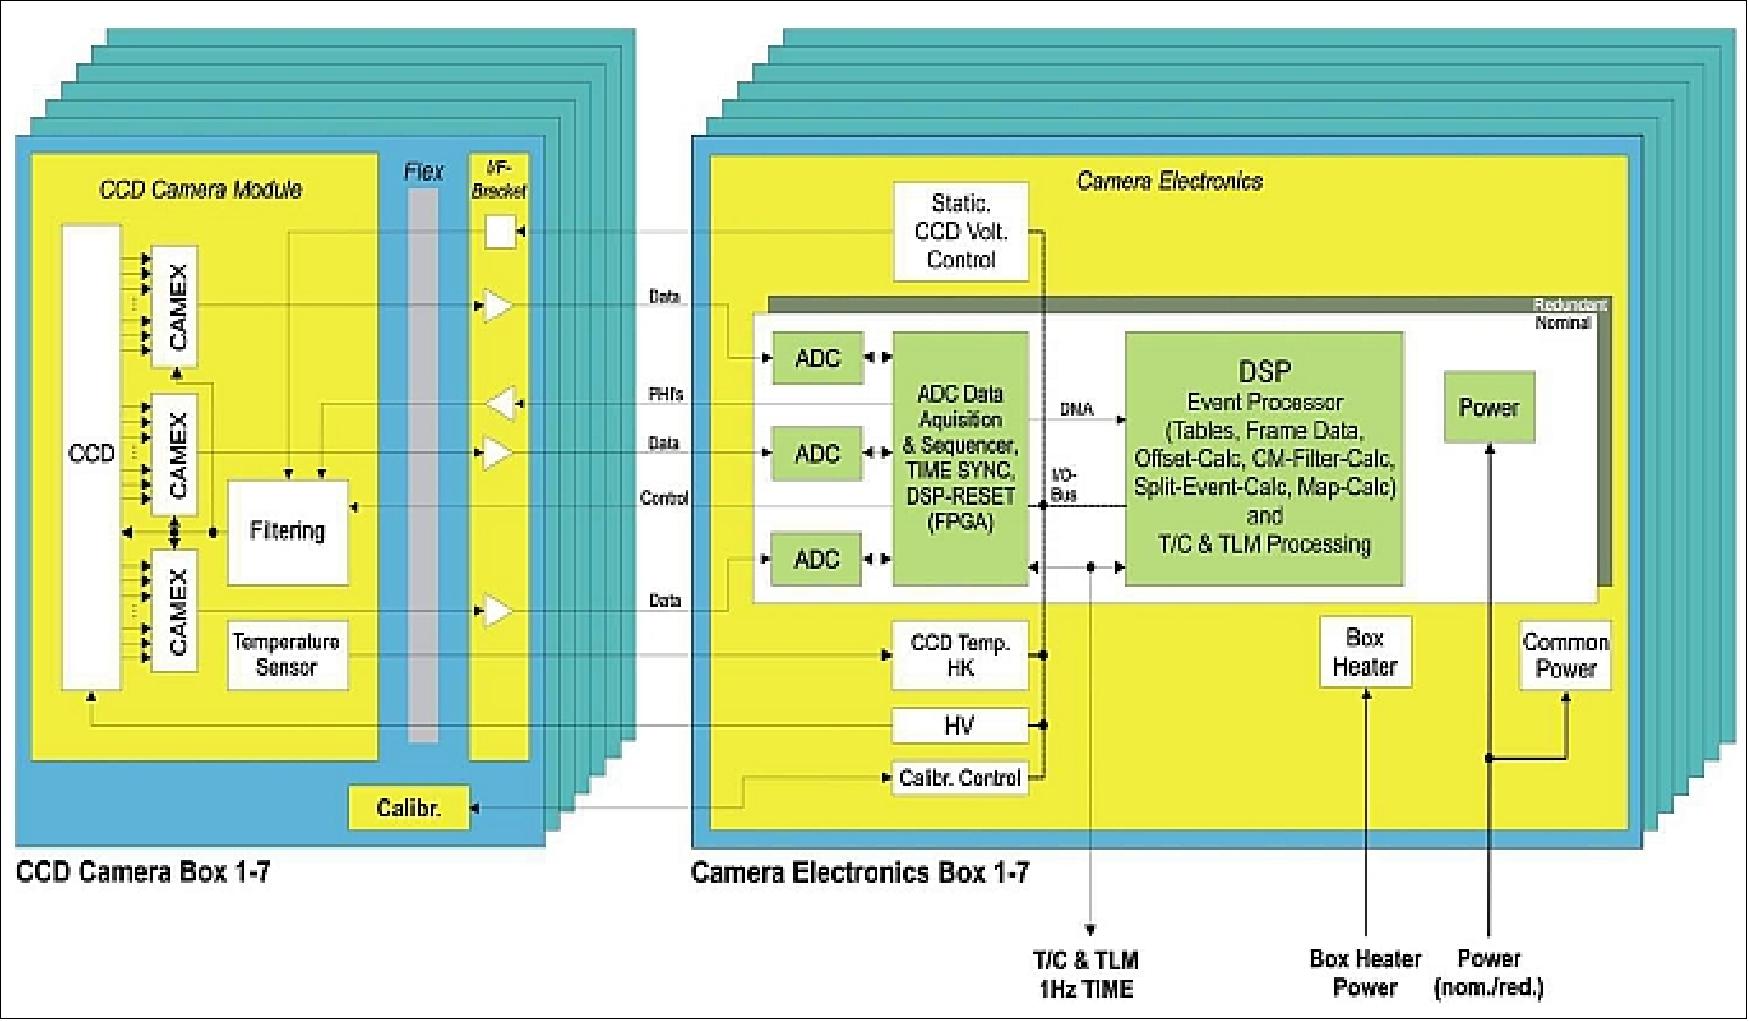 Figure 40: Block diagram of the eROSITA camera electronics (image credit: MPI)